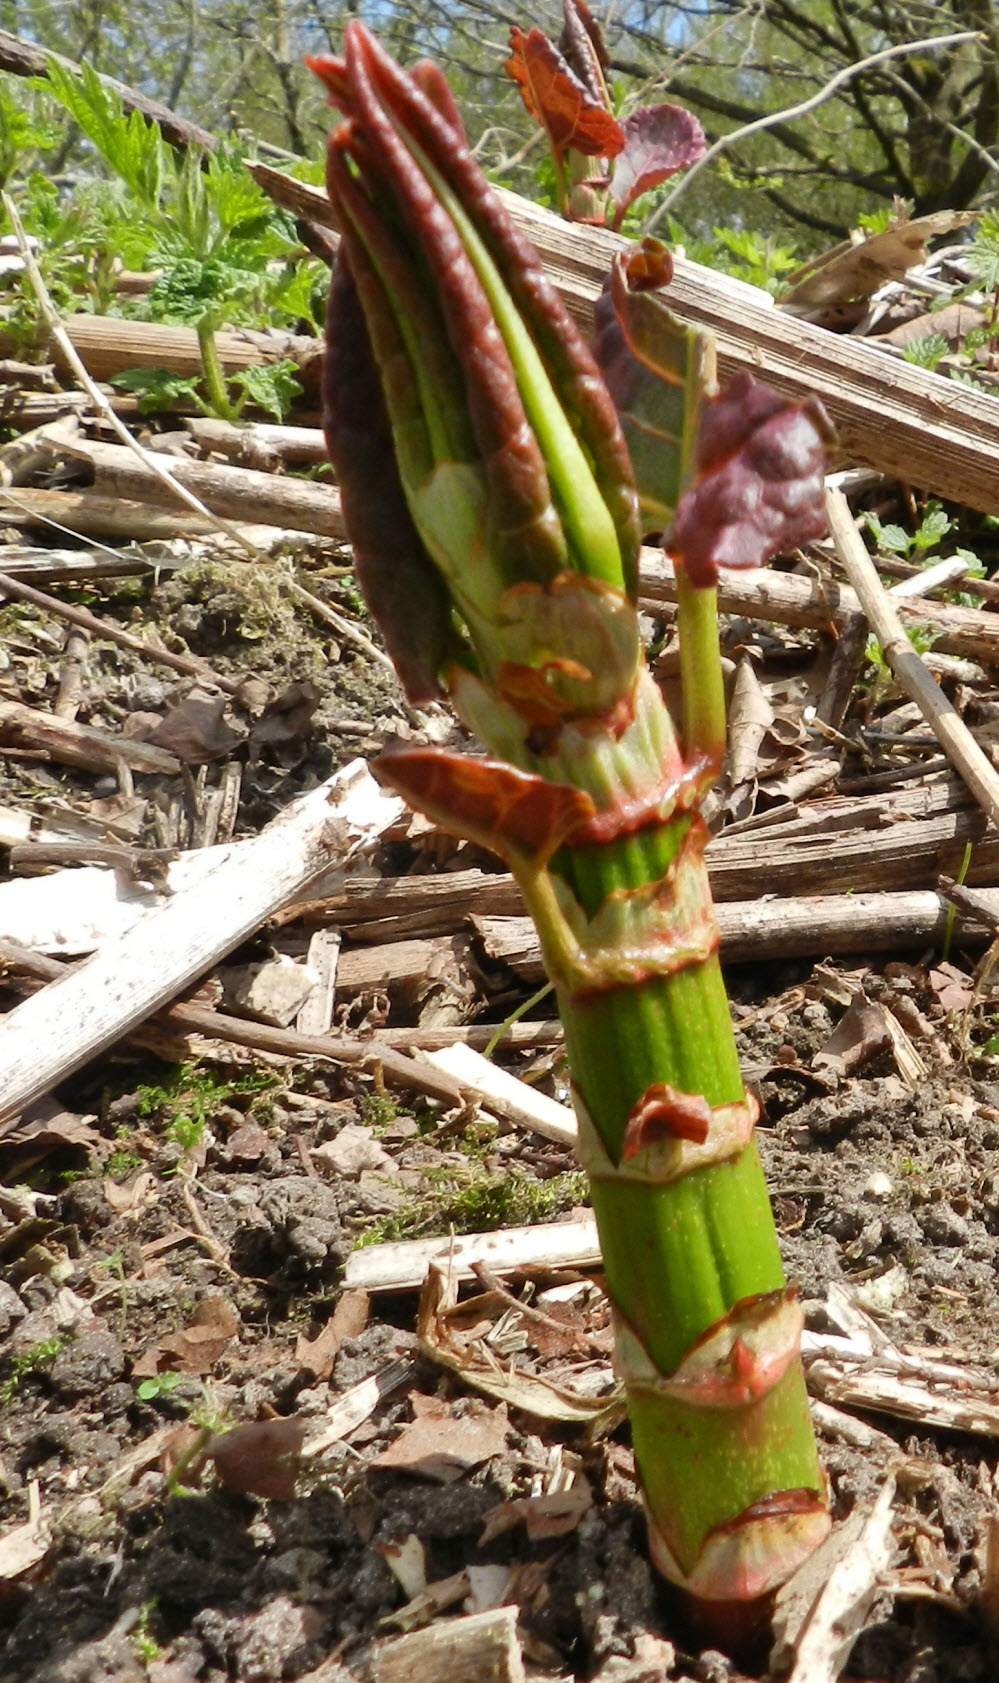 PLR Ltd UK - Japanese knotweed eradication - young growth - asparagus-like shoot emerging